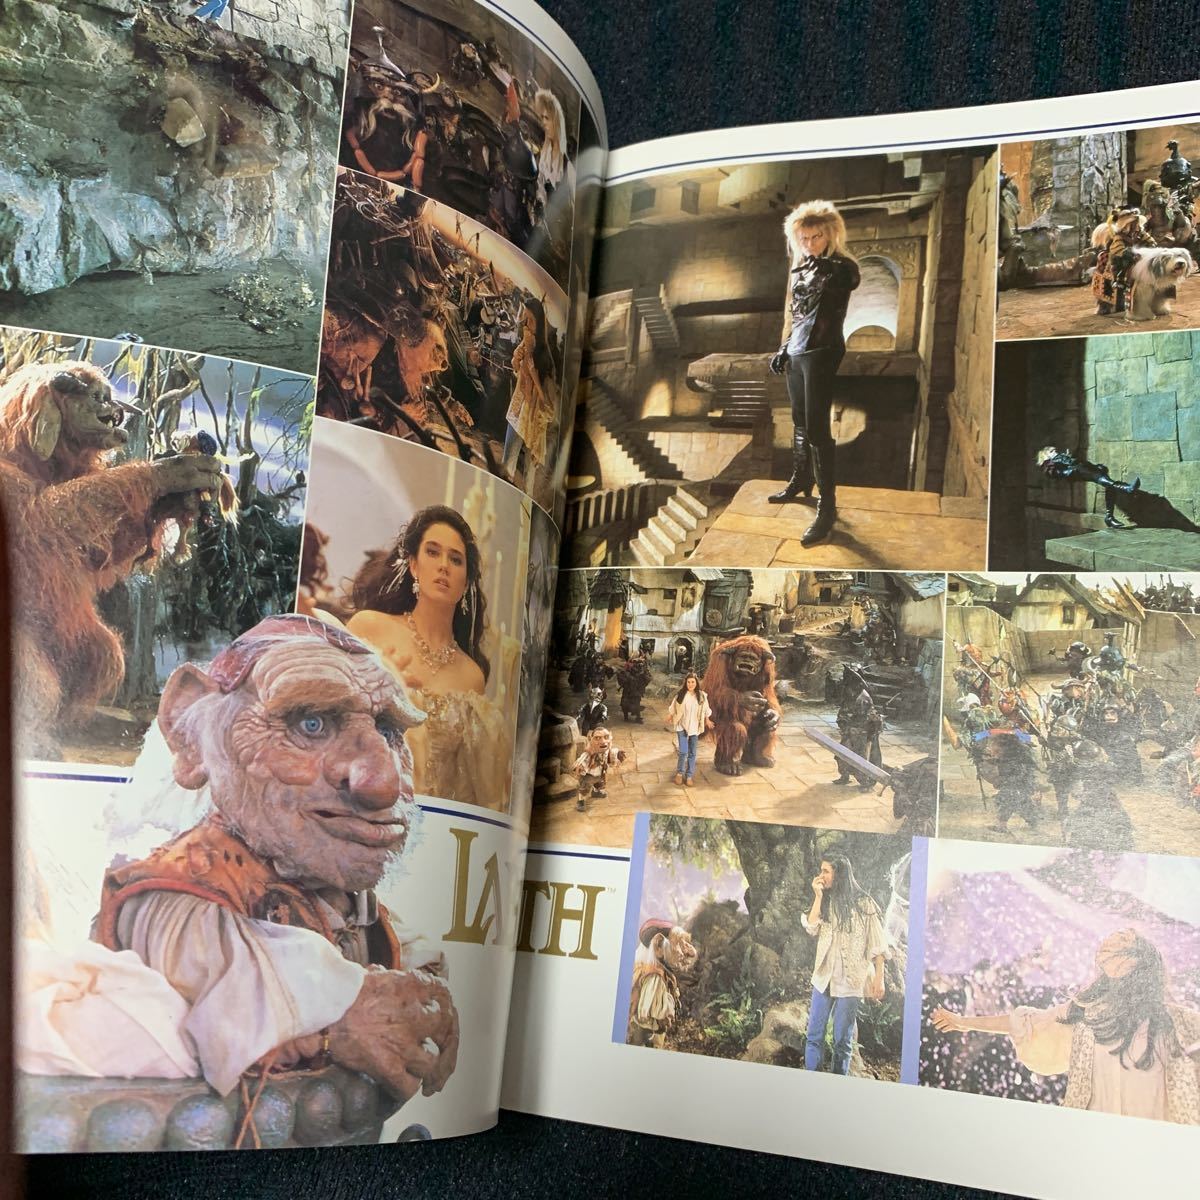  movie labyrinth Devil Kings. .. pamphlet retro debit boui fantasy masterpiece 